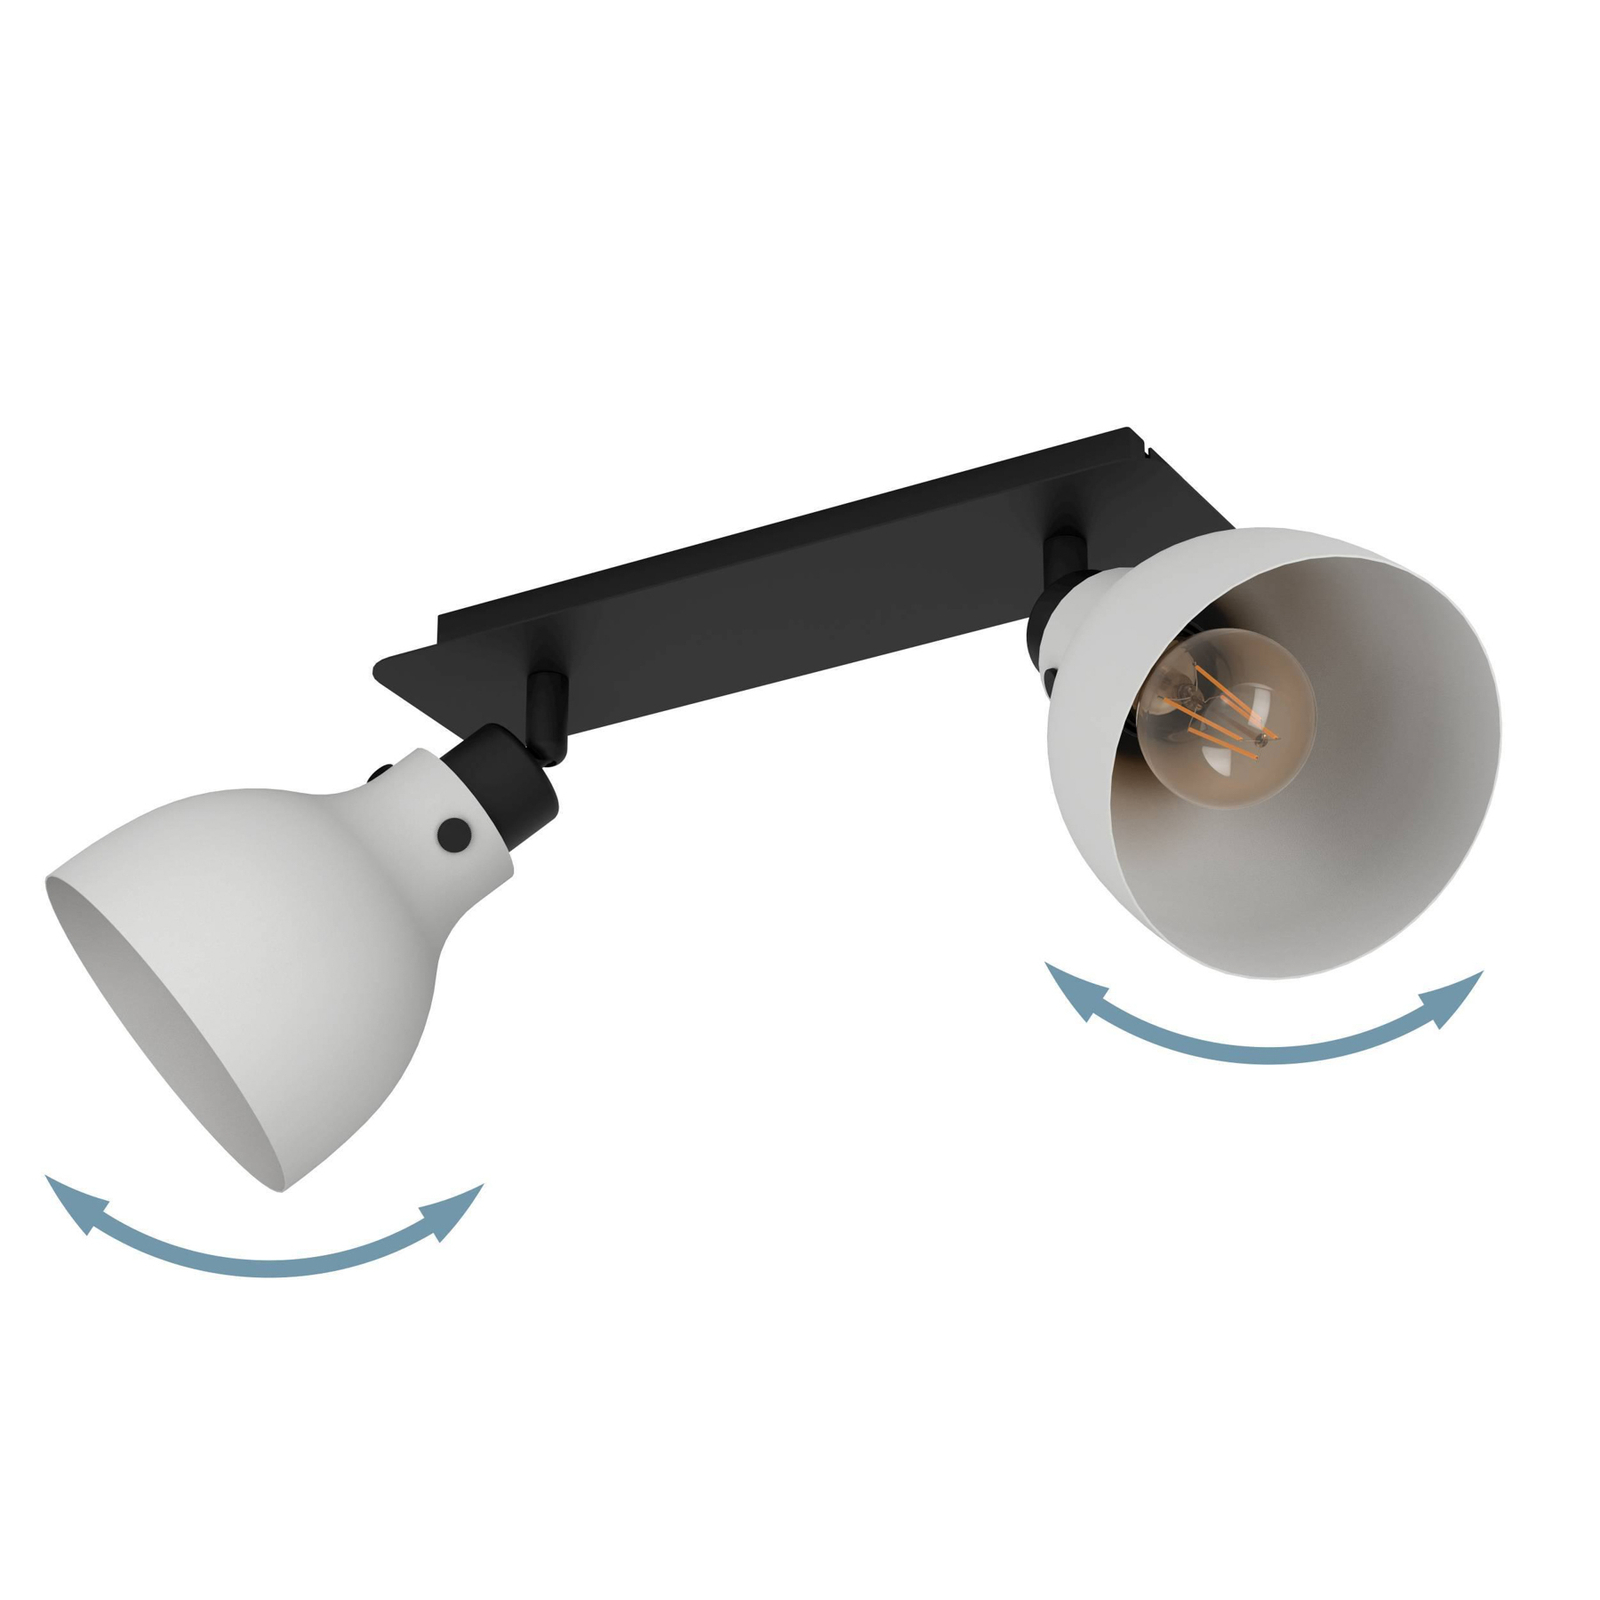 Matlock downlight, length 52 cm, grey/black, 2-bulb.